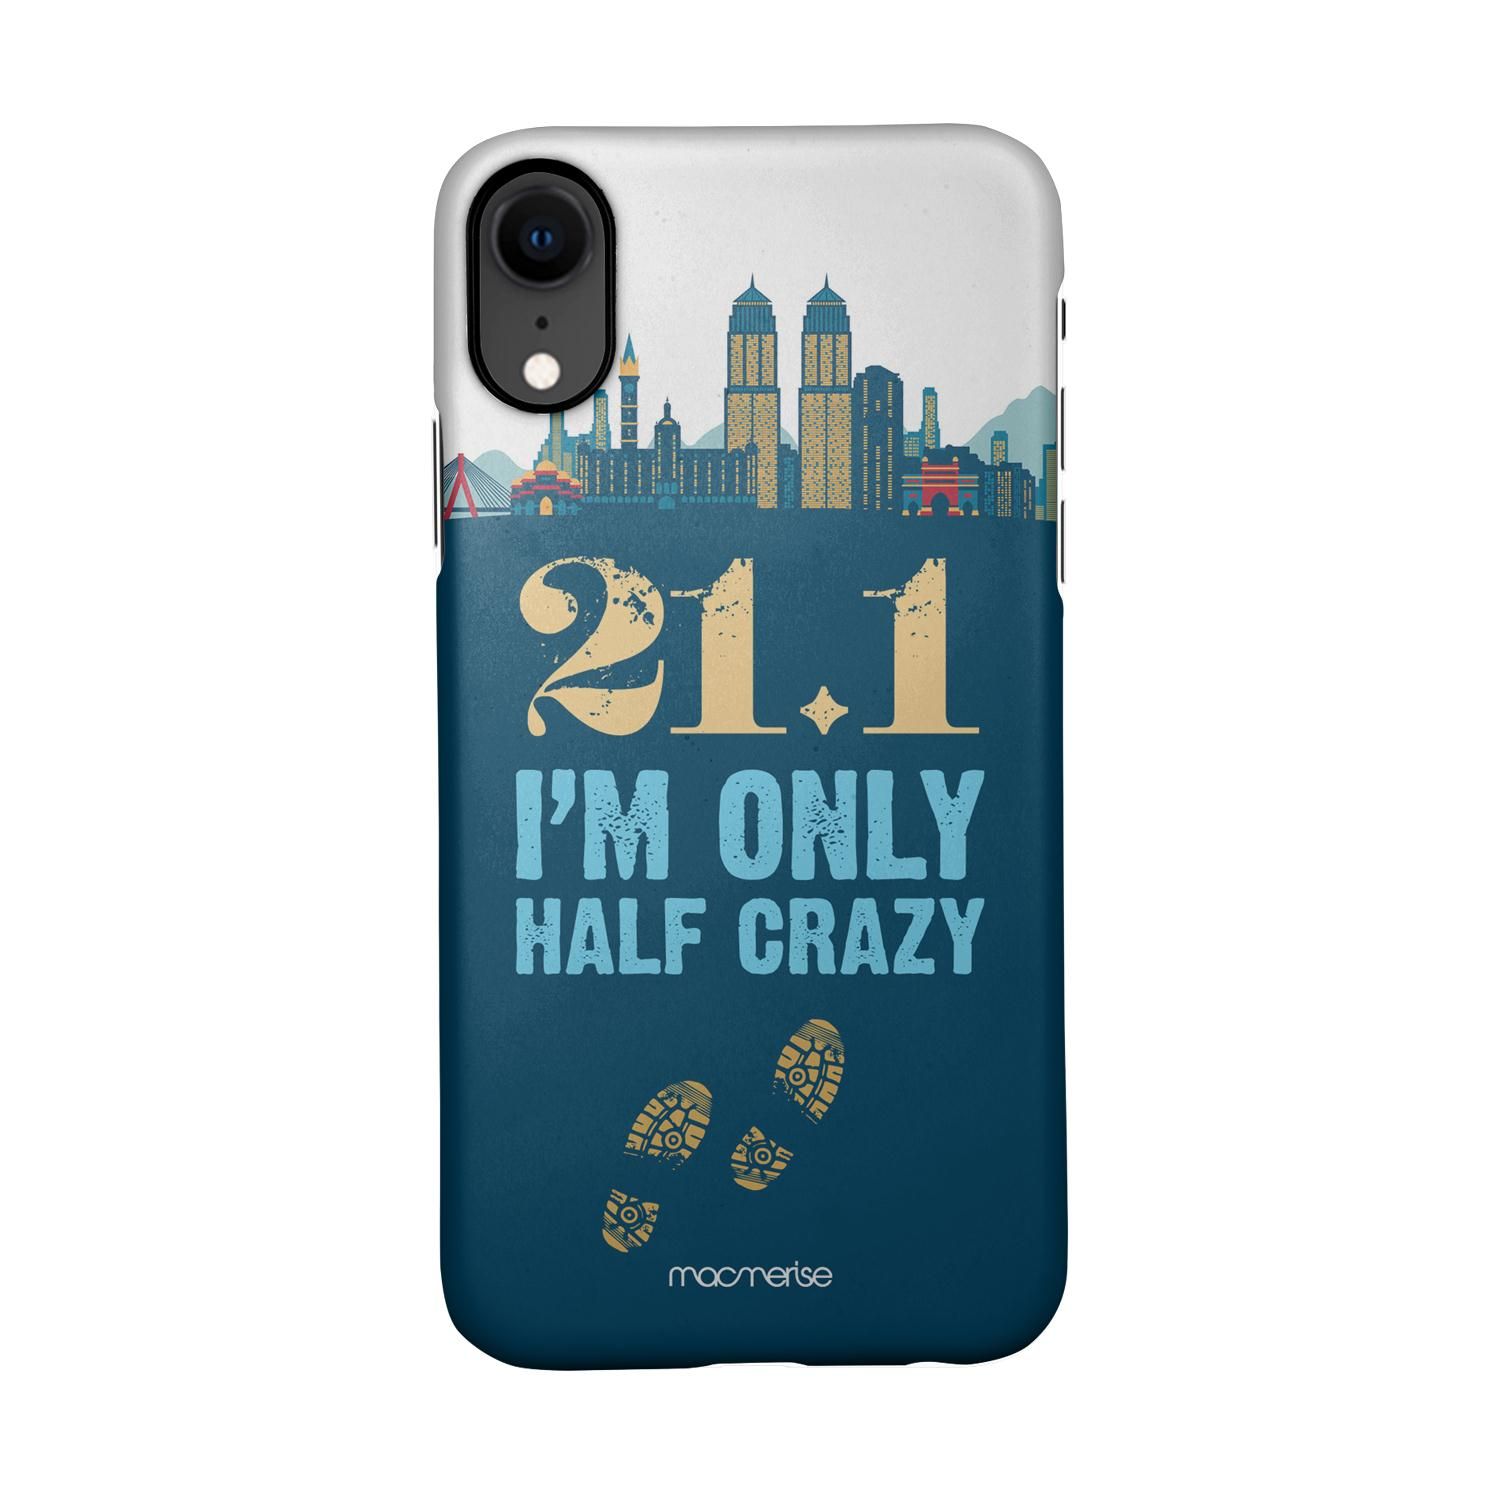 Buy Half Crazy - Sleek Phone Case for iPhone XR Online